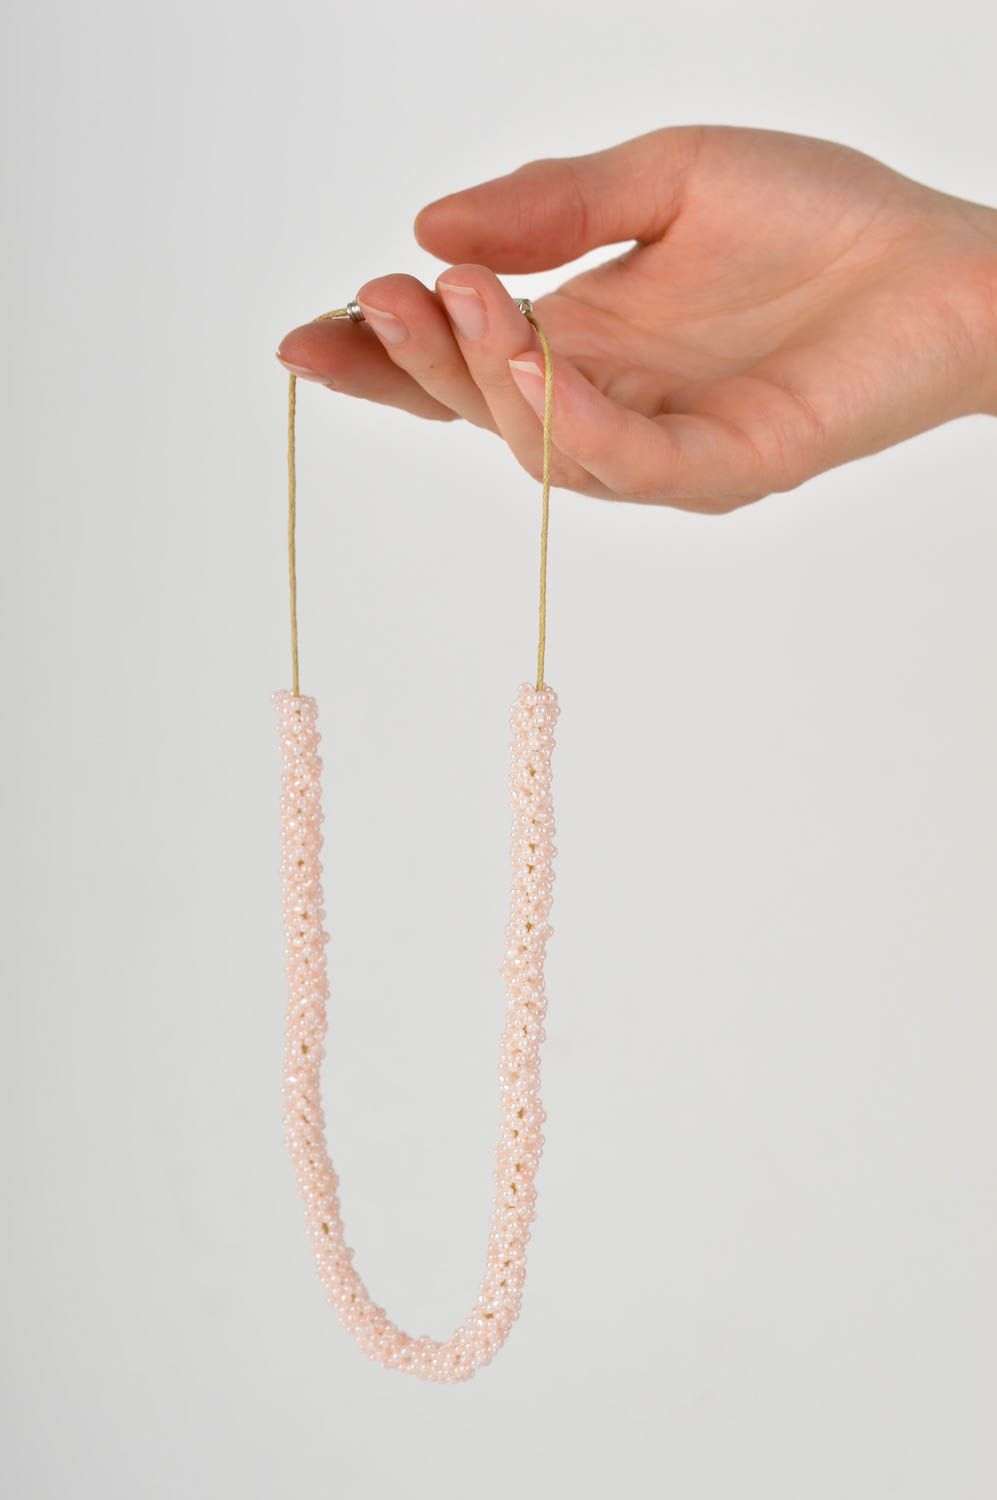 Festive handmade beaded necklace beaded cord necklace bead weaving gift ideas photo 5